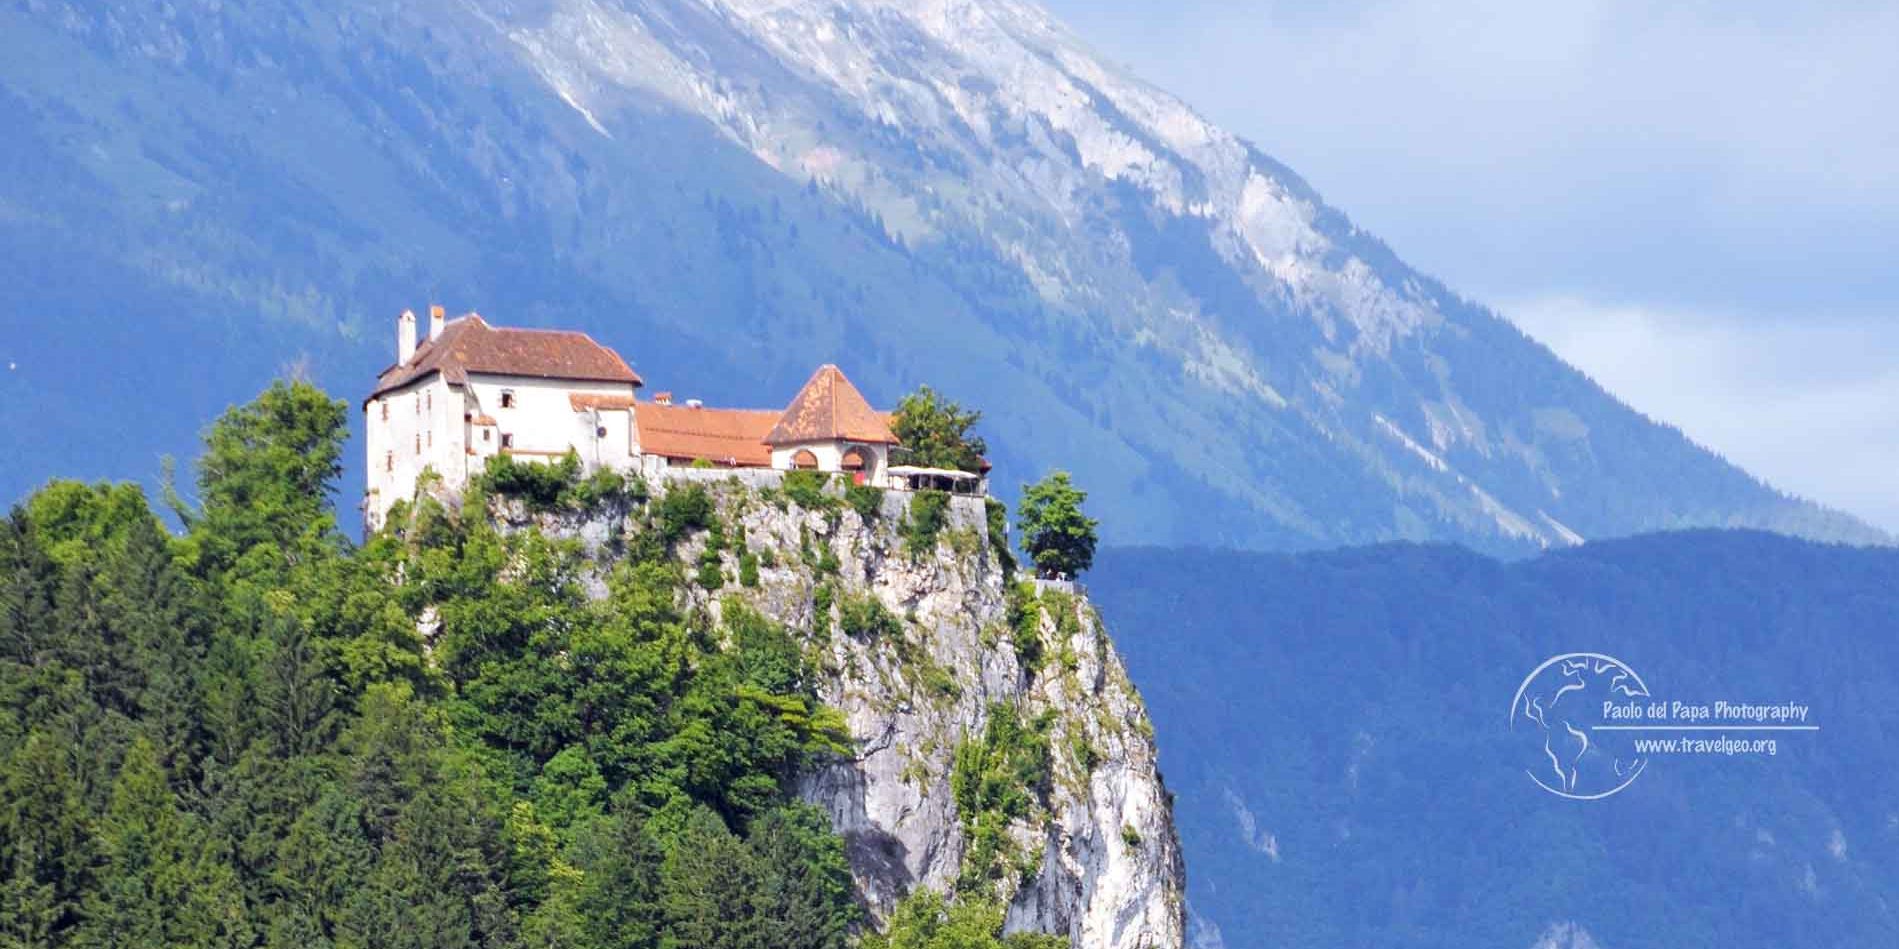 Photo of Vie delle Alpi